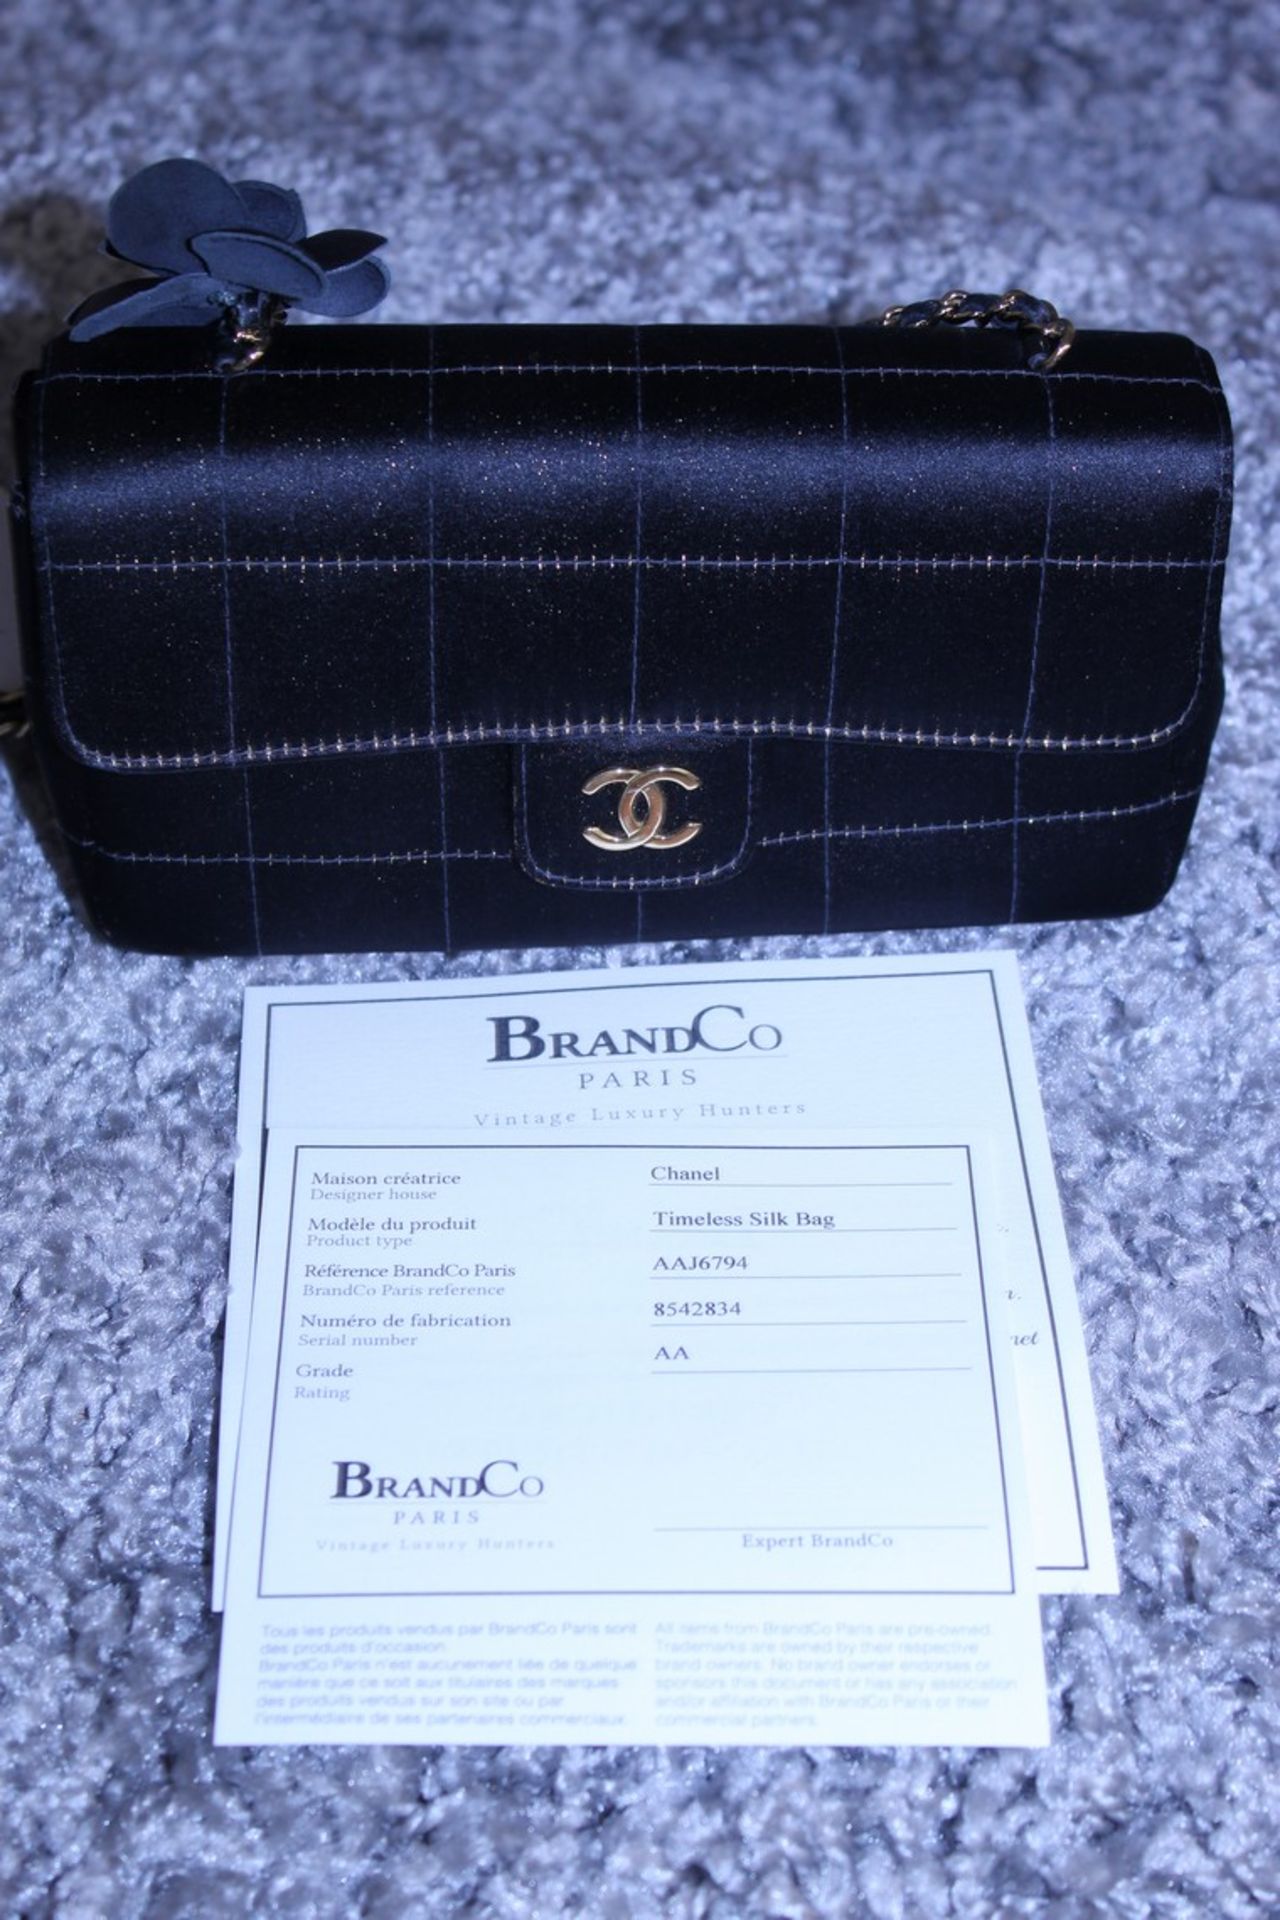 RRP £3,500 Chanel Timeless Silk Handbag - Image 4 of 4